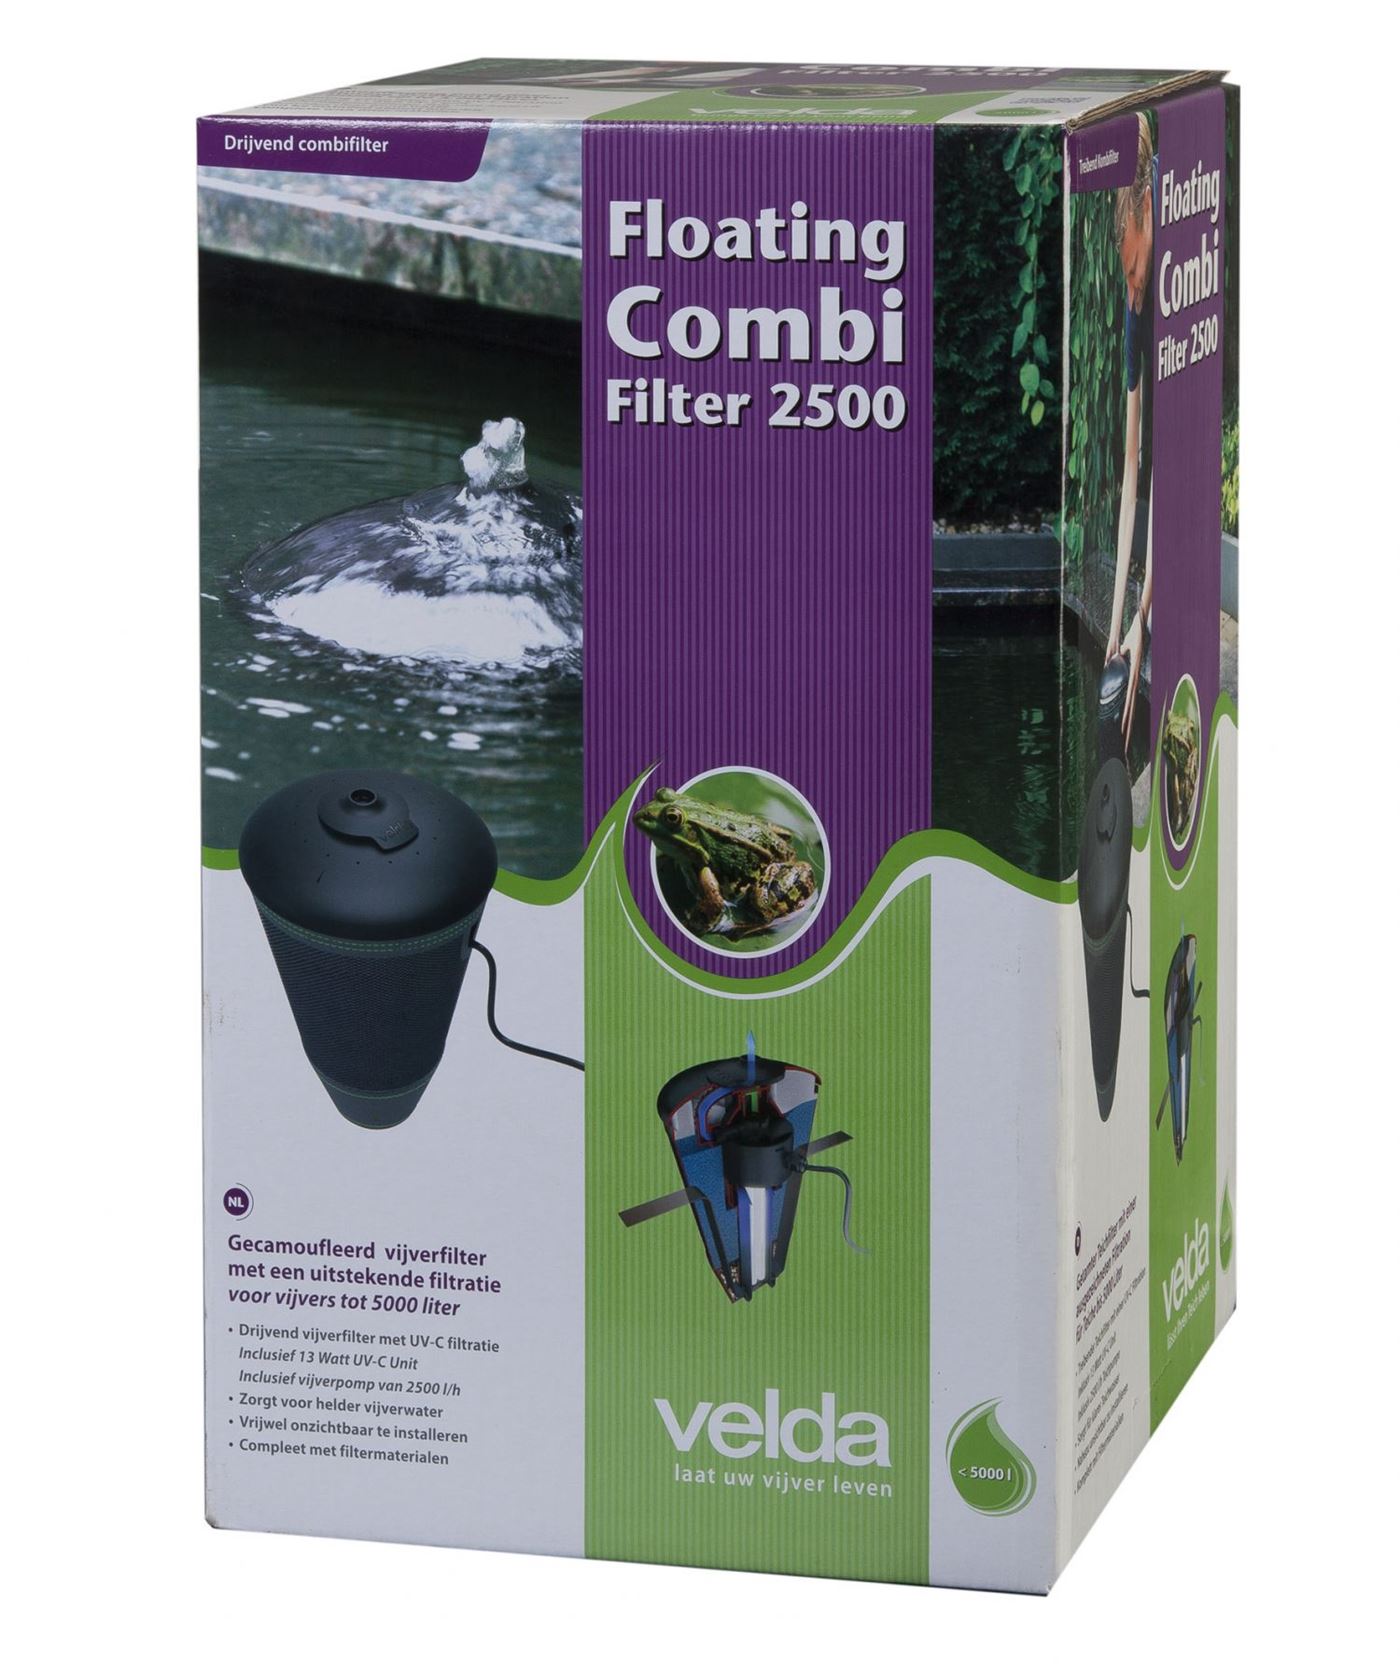 Floating-Combi-Filter-2500-drijvend-vijverfilter-pomp-2500-l-h-UV-C-13-W